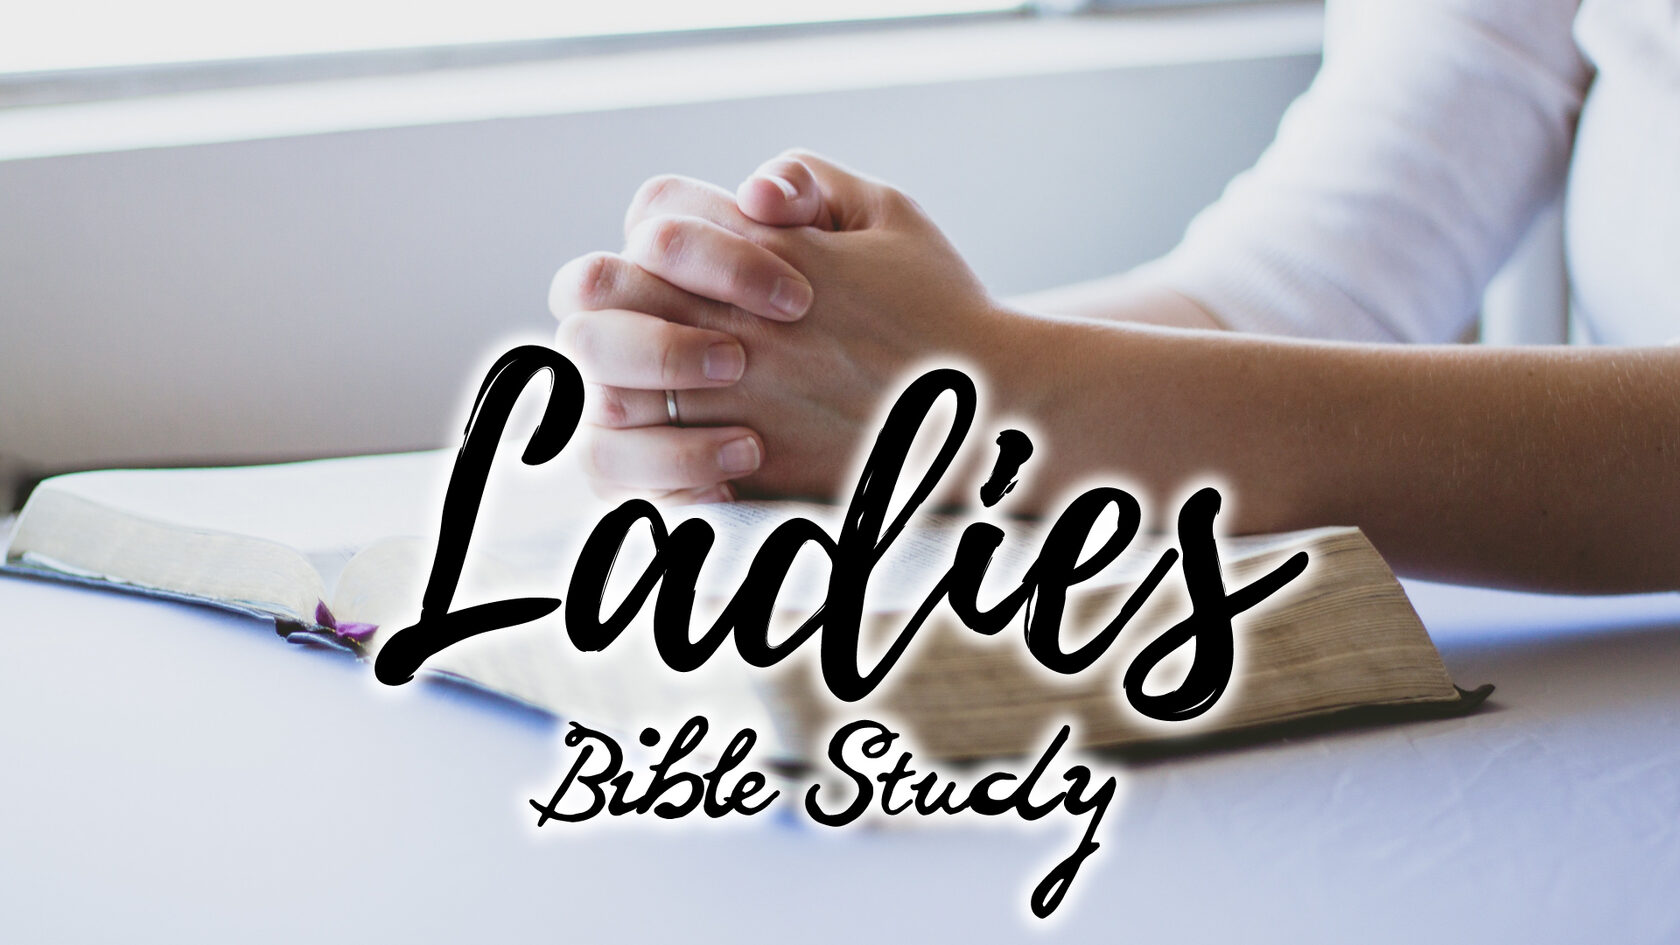 keep it shut ladies bible study